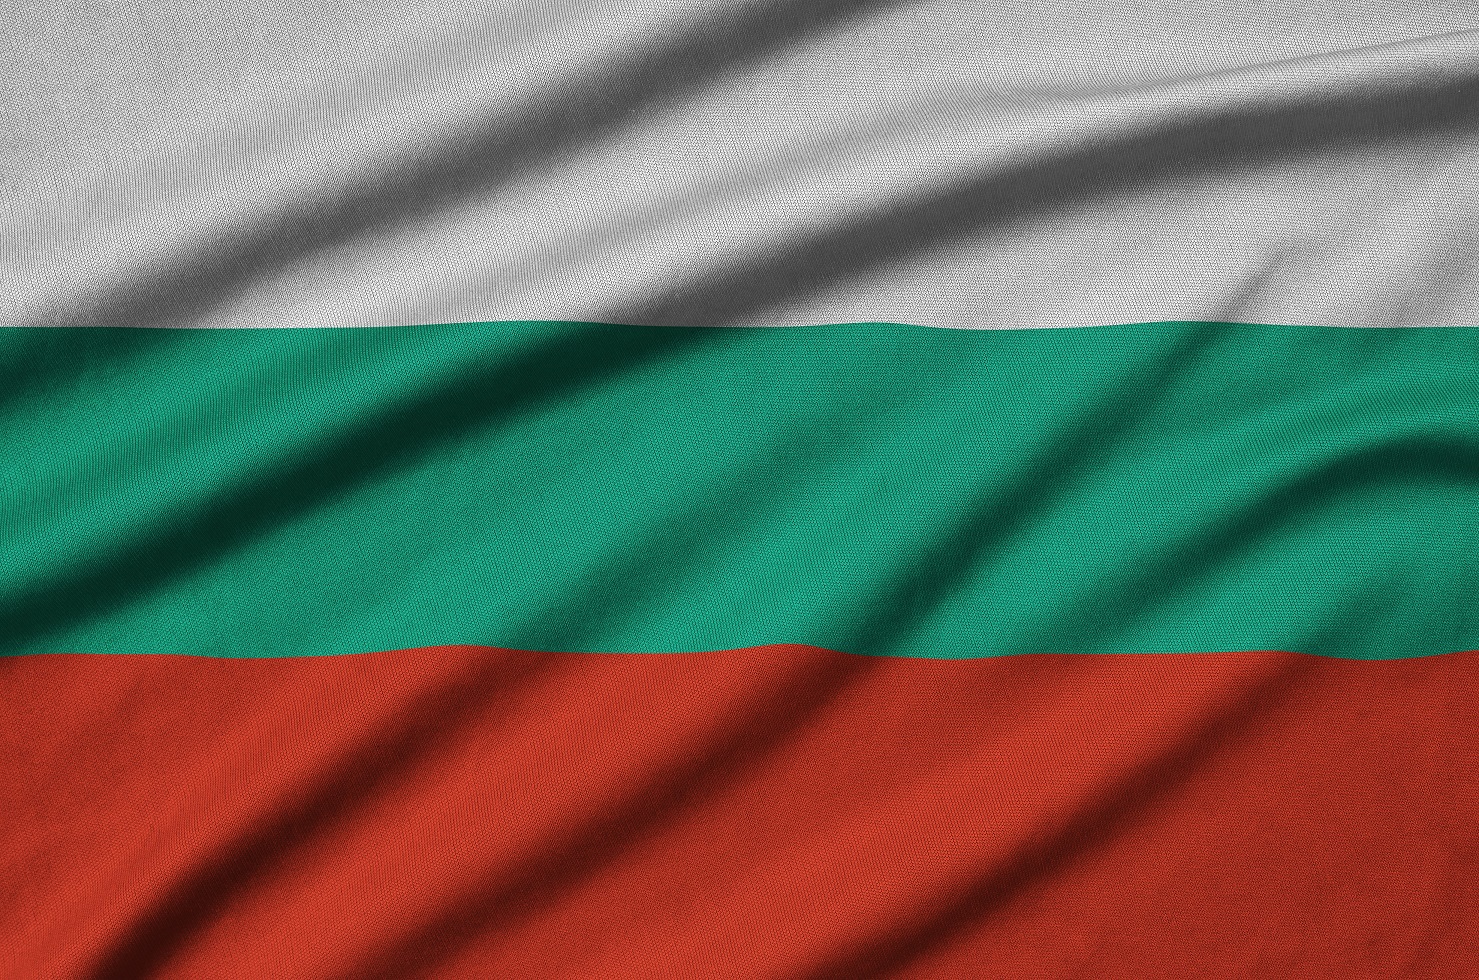 bulgaria flag is depicted on a sports cloth fabric DZ57B8N новости Болгария, шпионаж